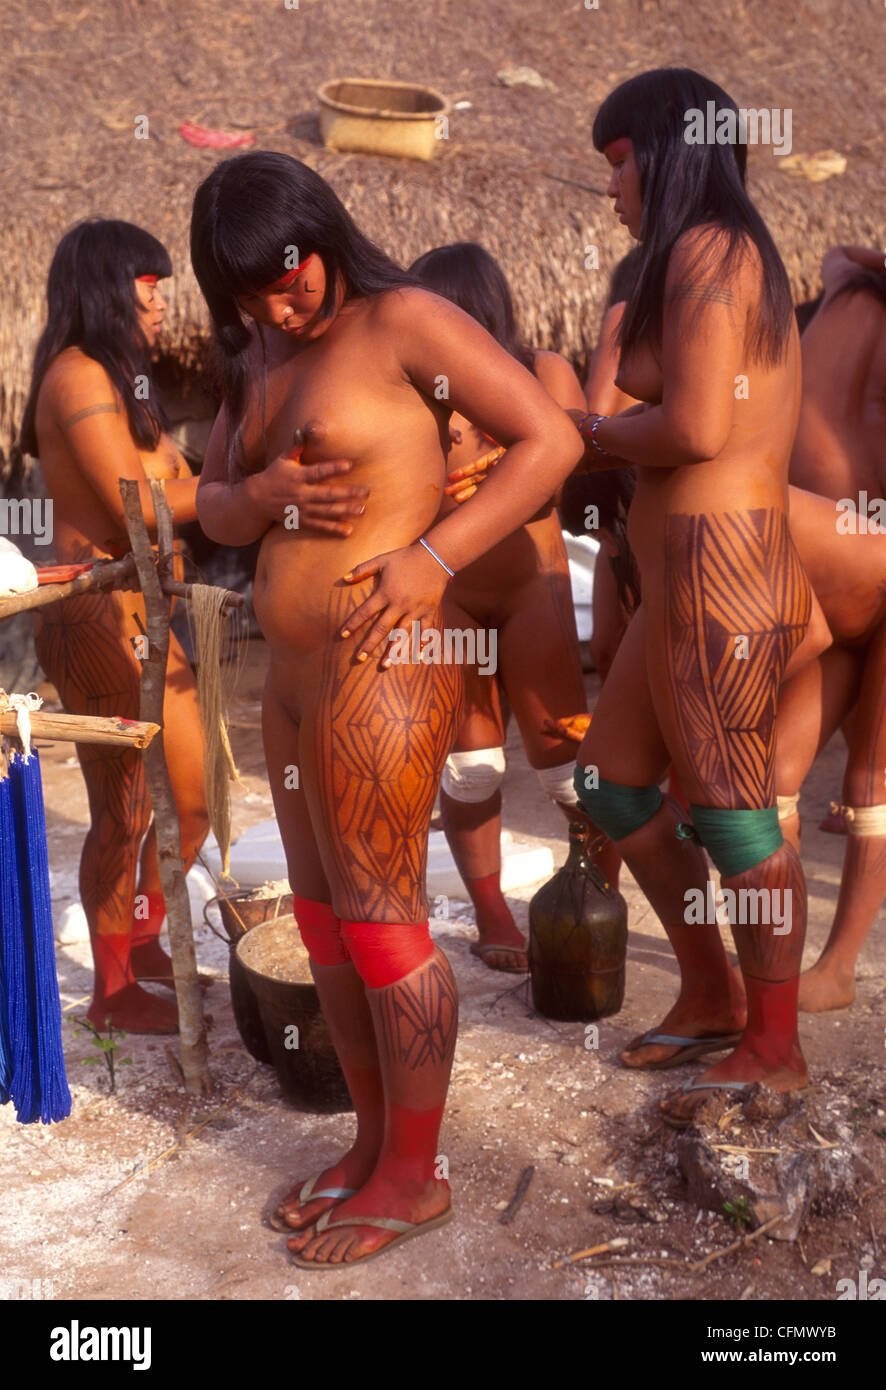 Amazon Tribes Women Erotica (61 photos) - porn photo